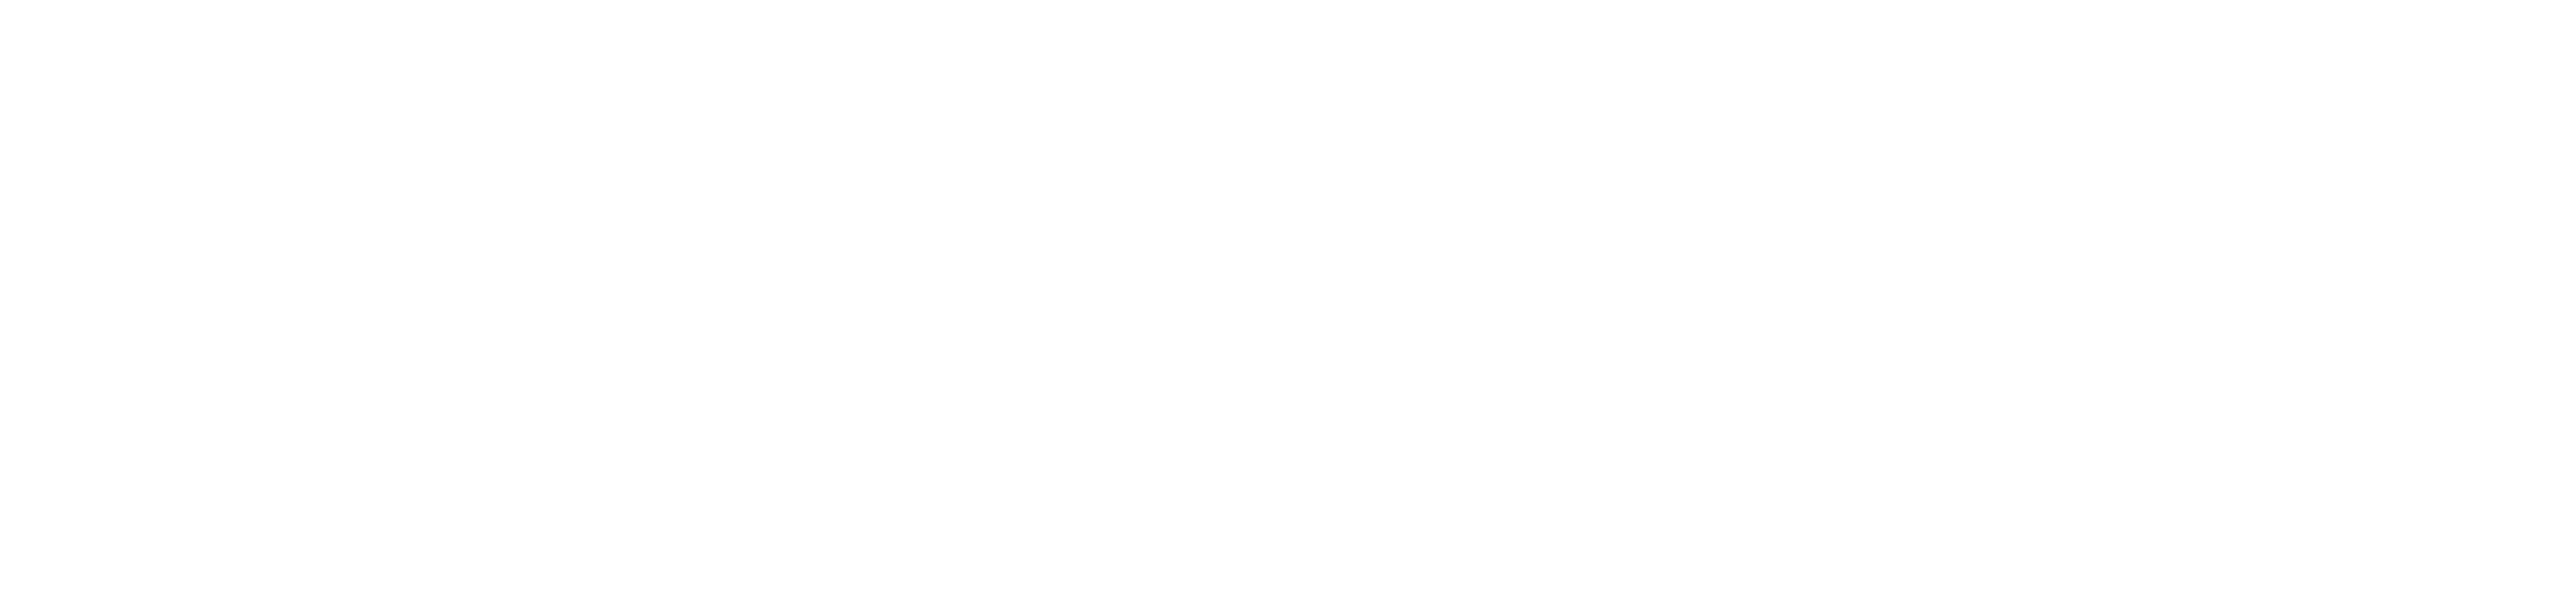 Kalamazoo-Periodontics_Primary-Logo-White-1